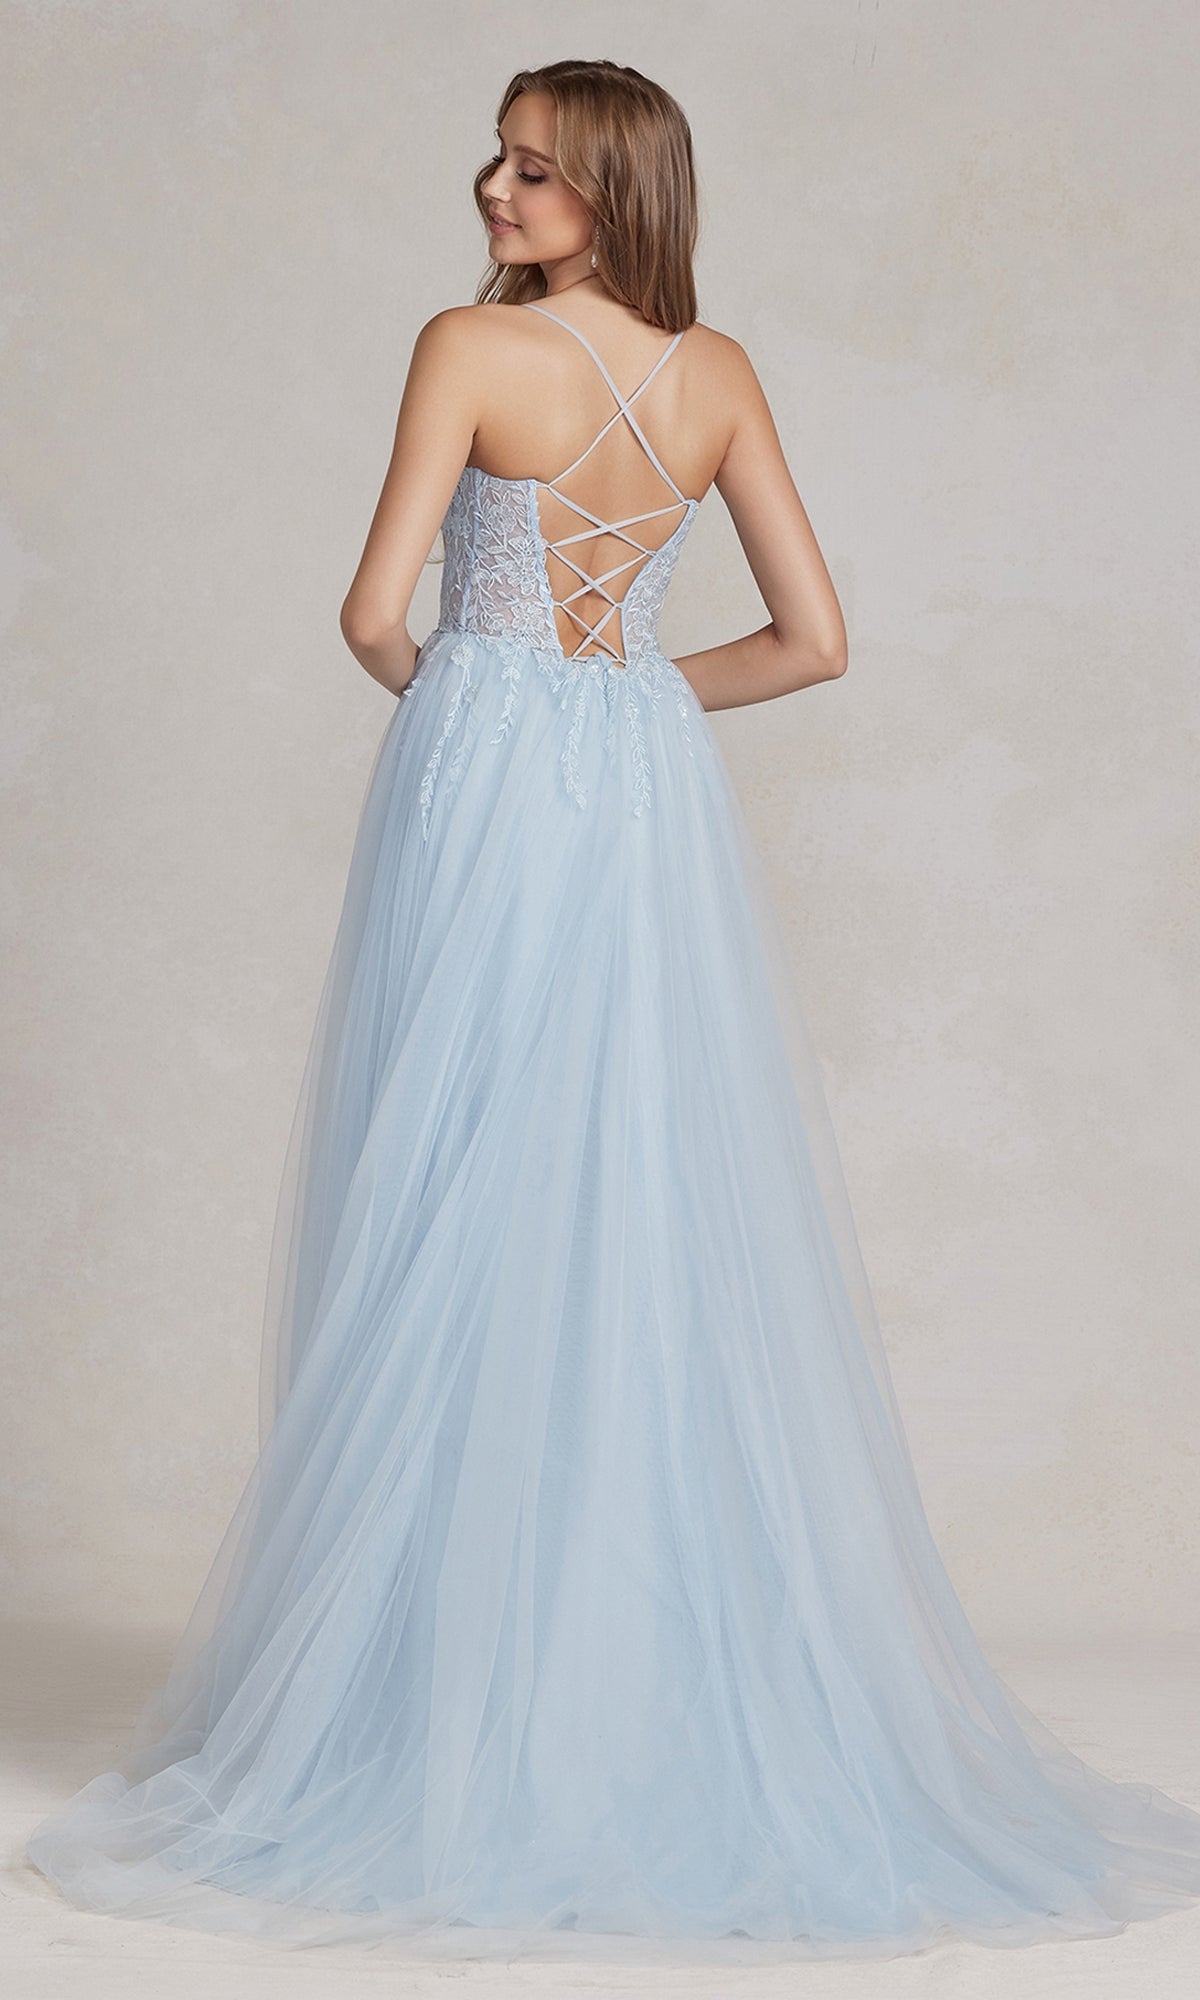 Corset-Bodice Long Pastel Prom Dress